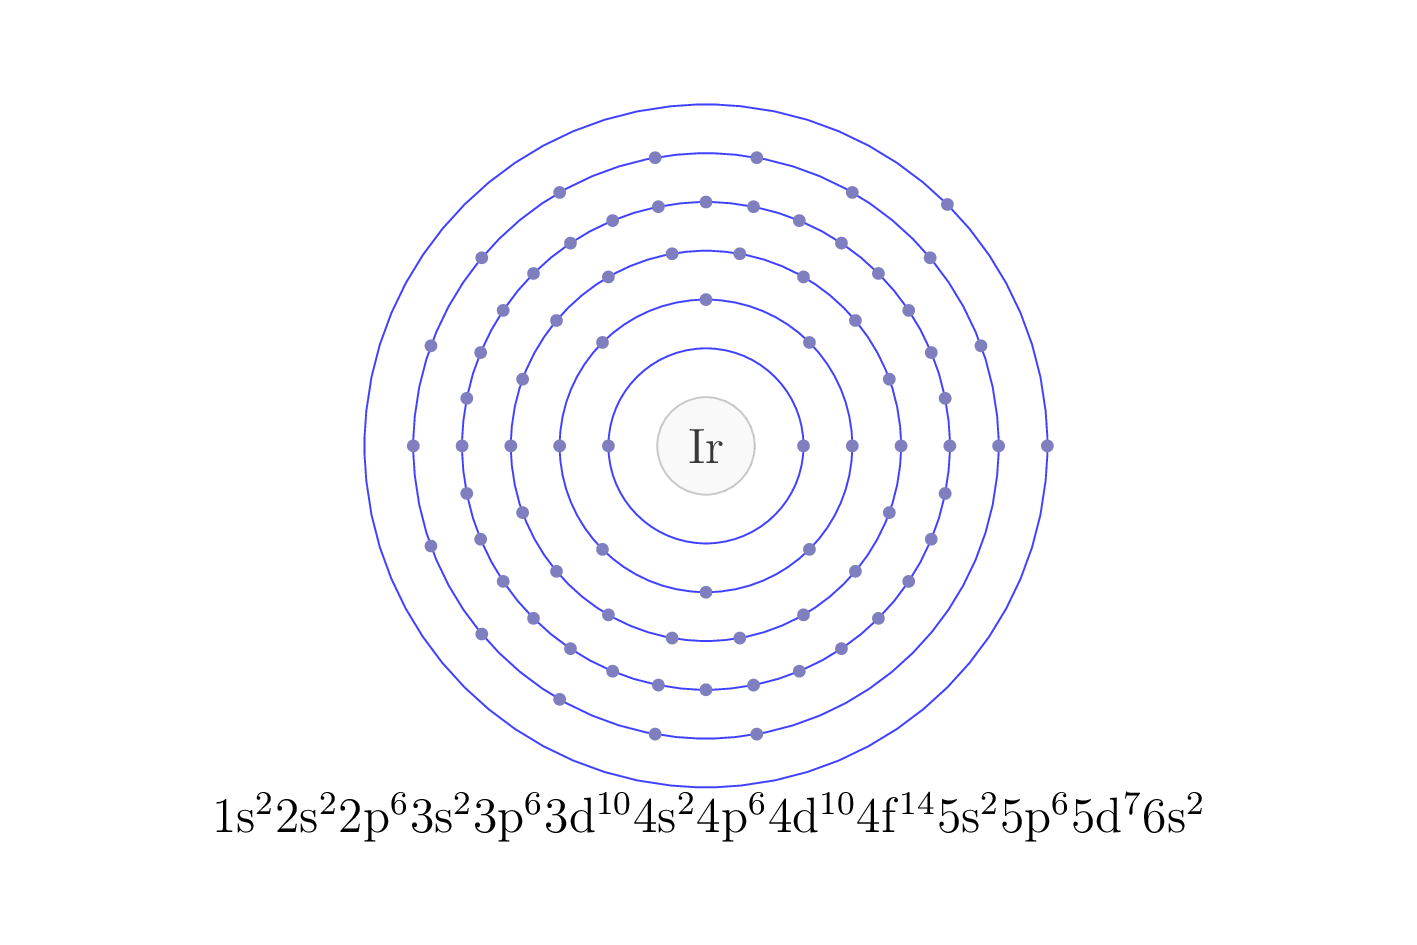 electron configuration of element Ir